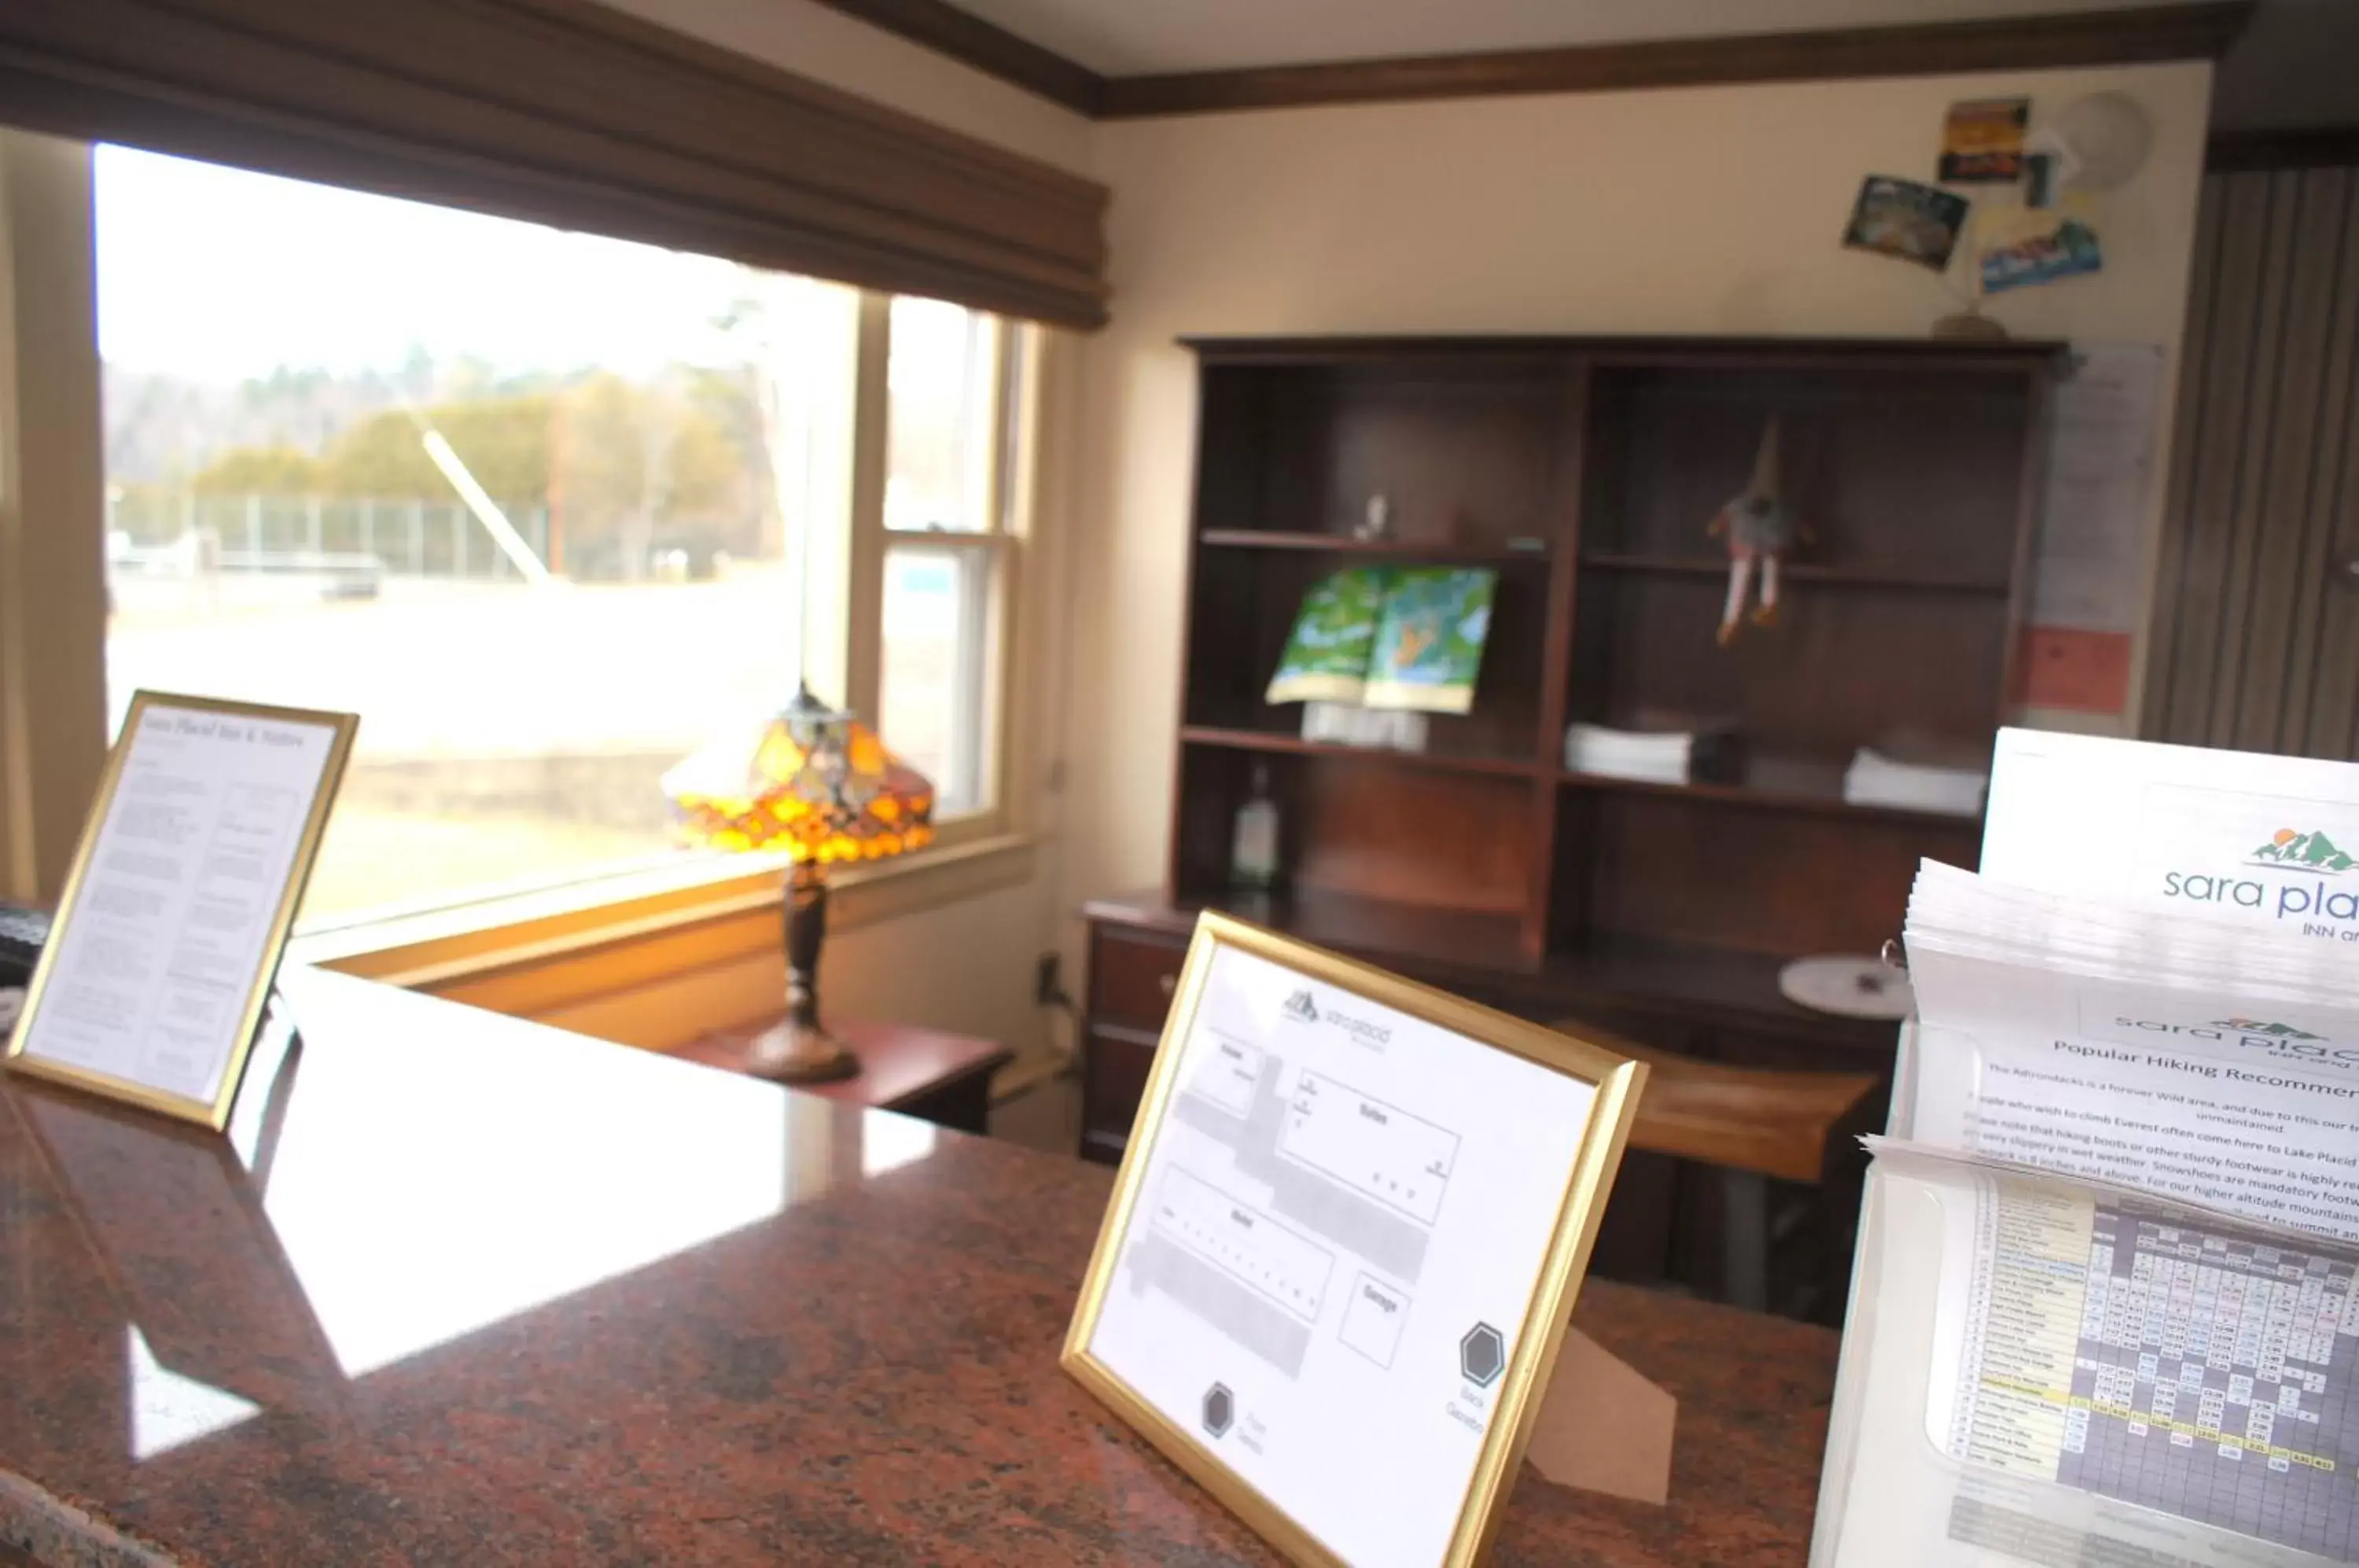 Lobby or reception in Sara Placid Inn & Suites